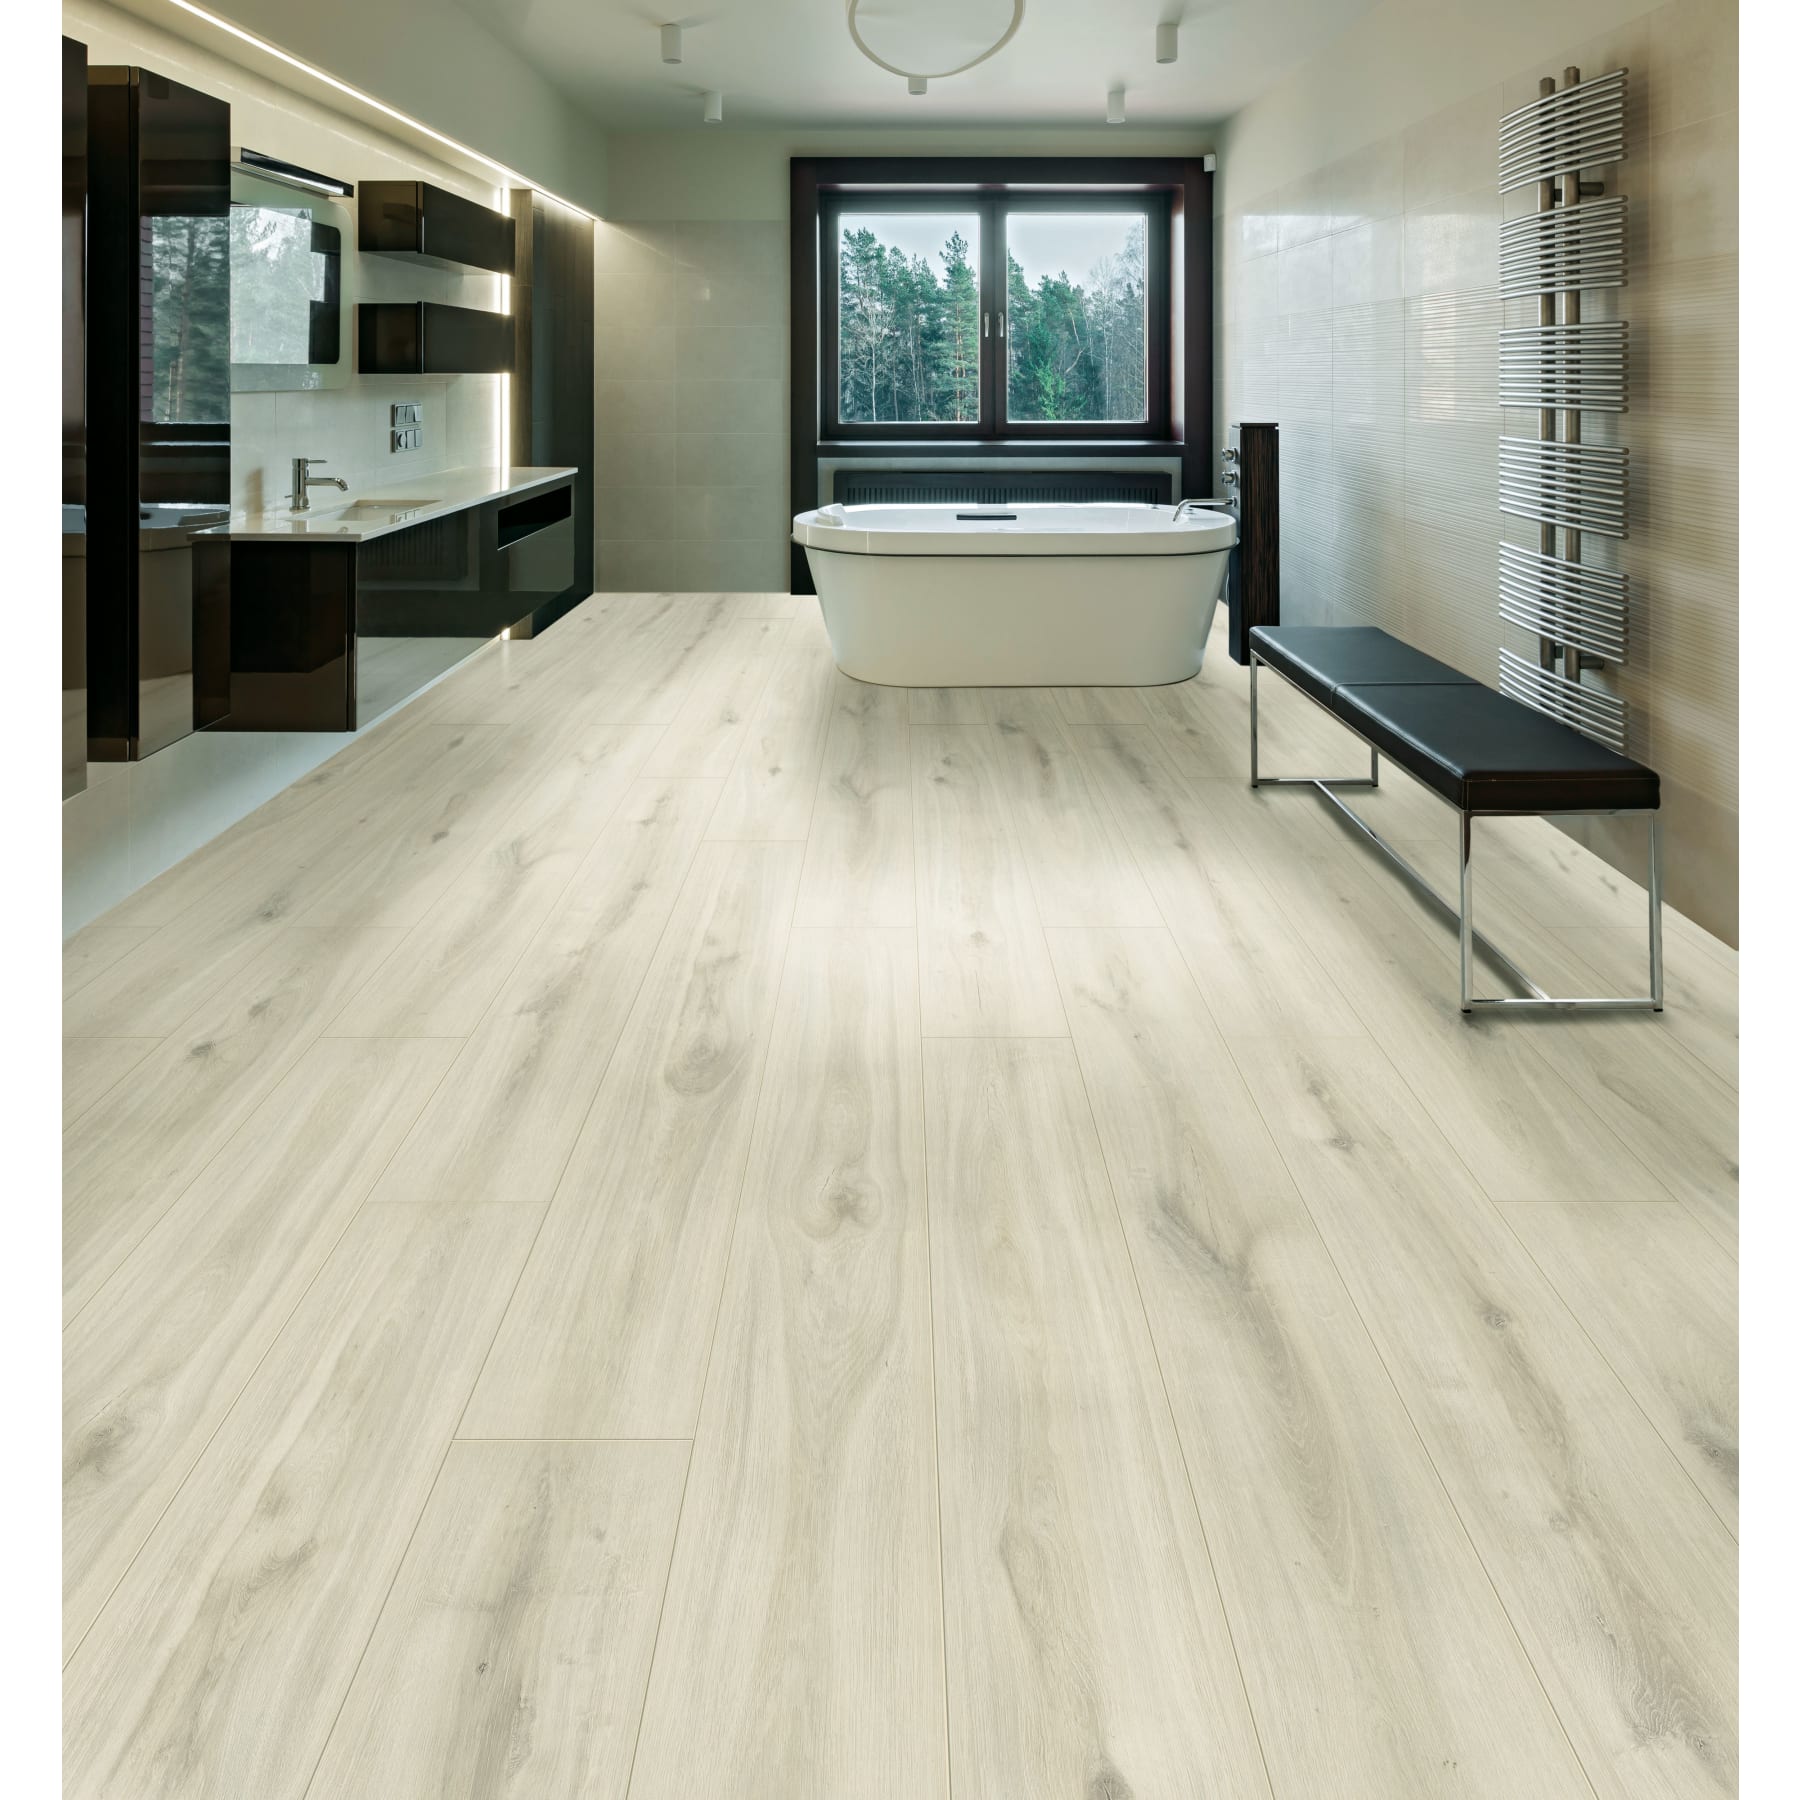 Berwick White Oak Moisture Resistant, Best Water Resistant Laminate Flooring Uk